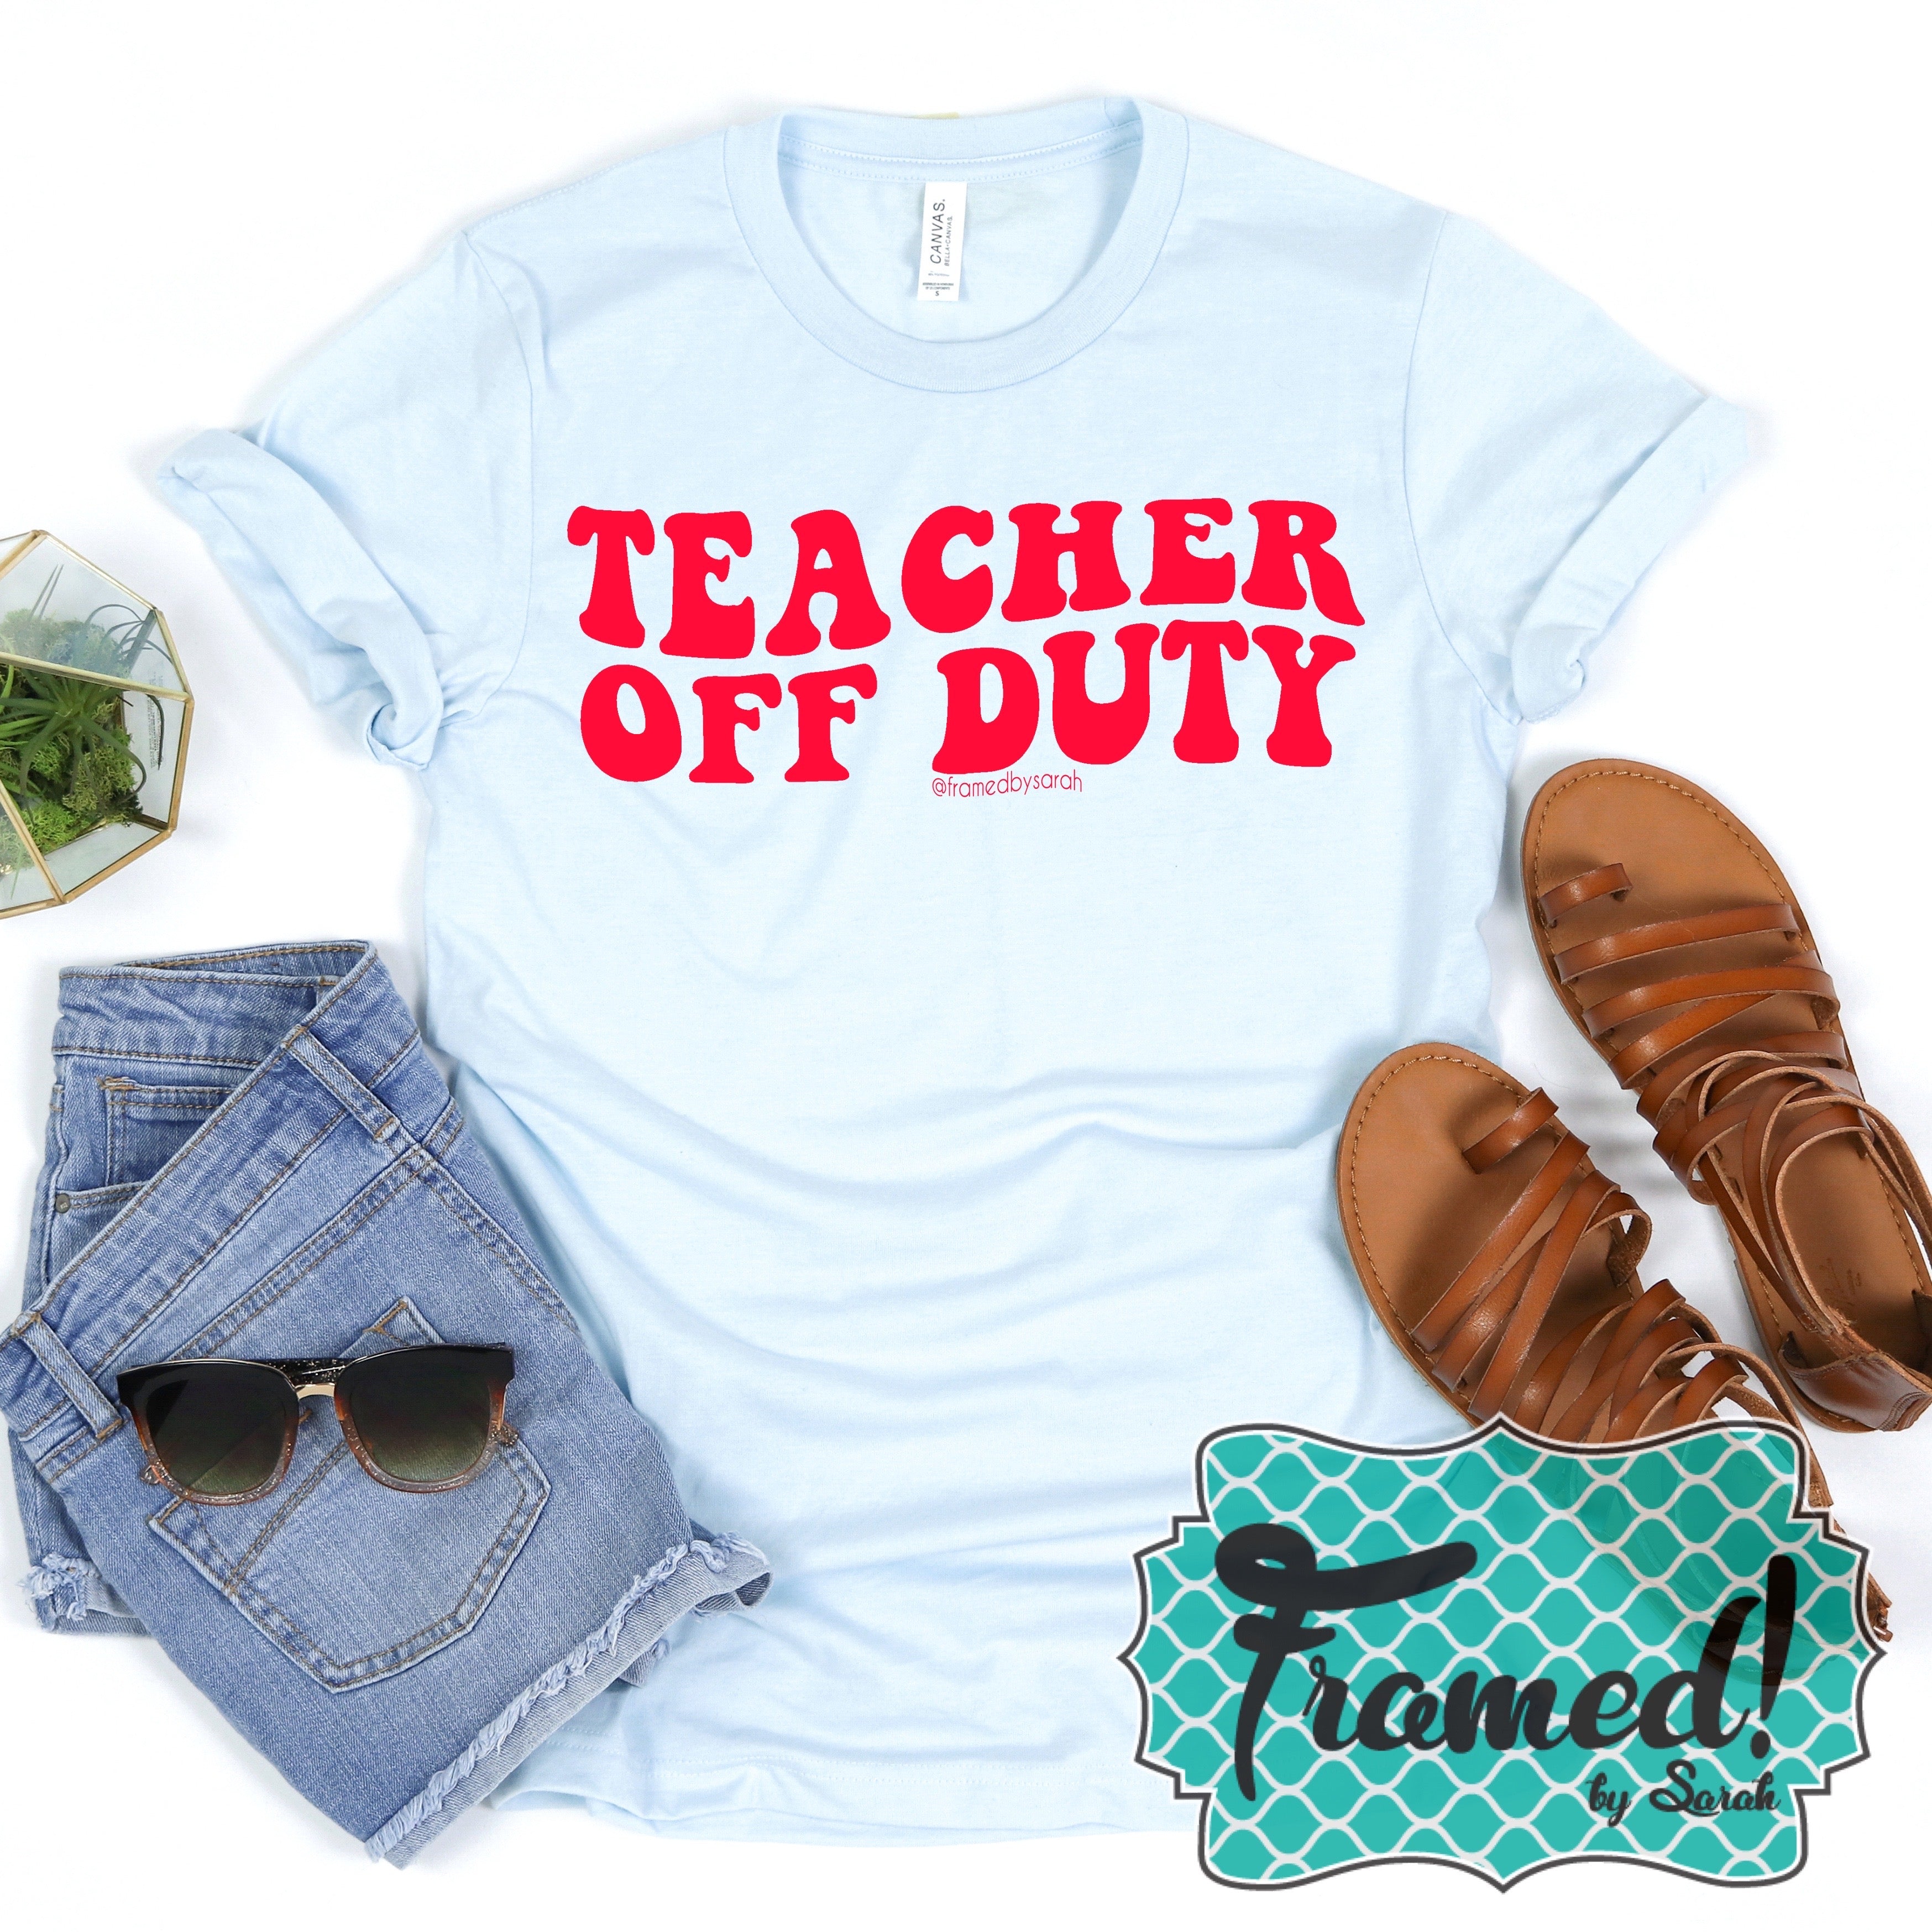 Teacher Off Duty Tee (Large only)